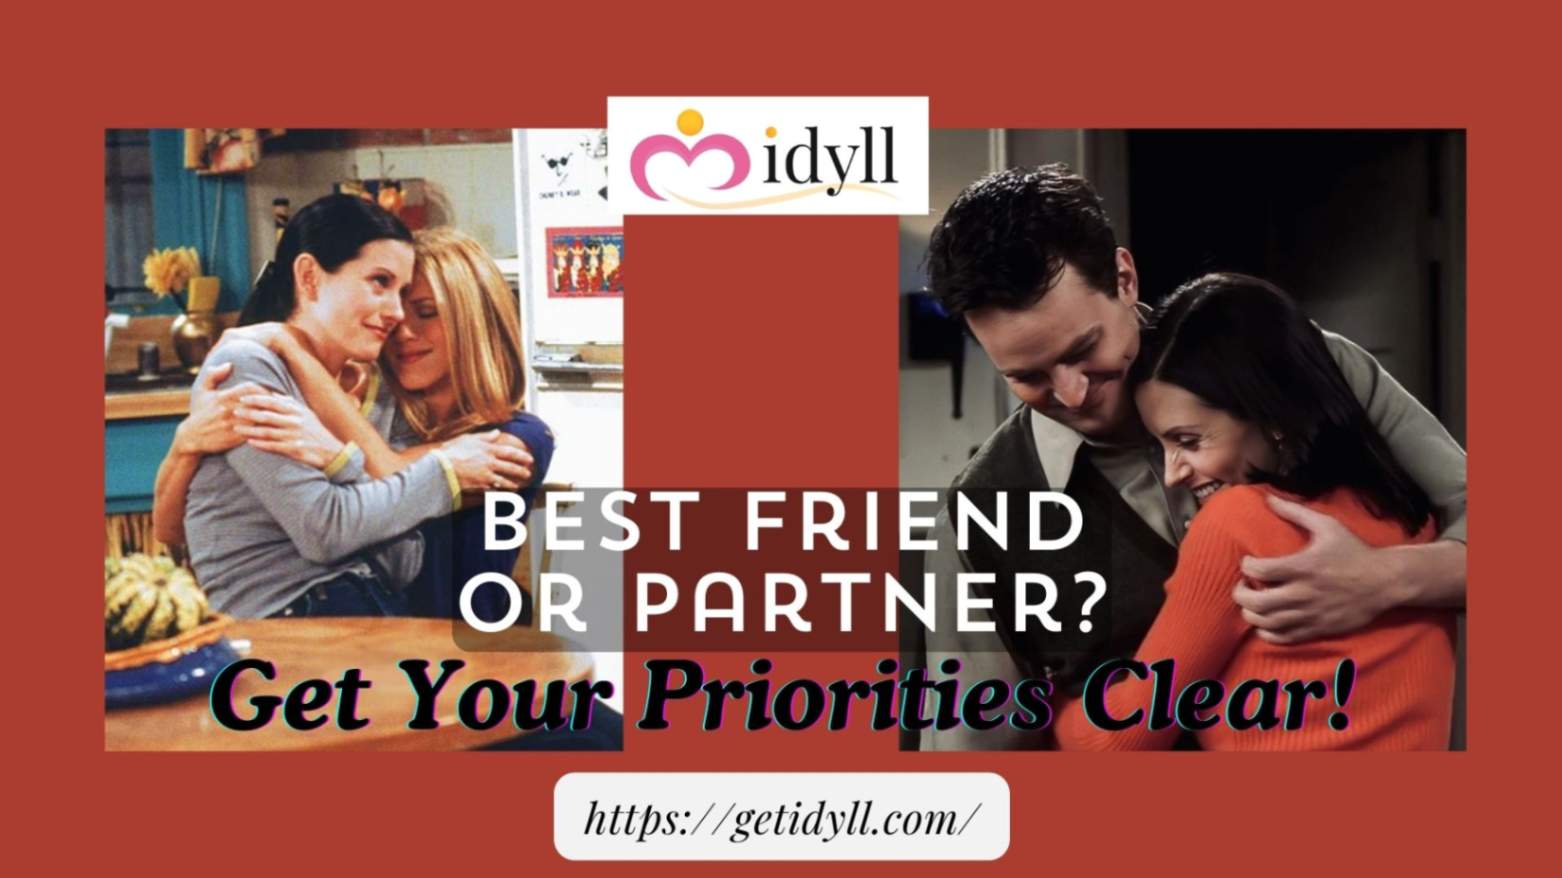 idyll, idyll dating, best friend, partner, romance, date, dating advice, priorities 